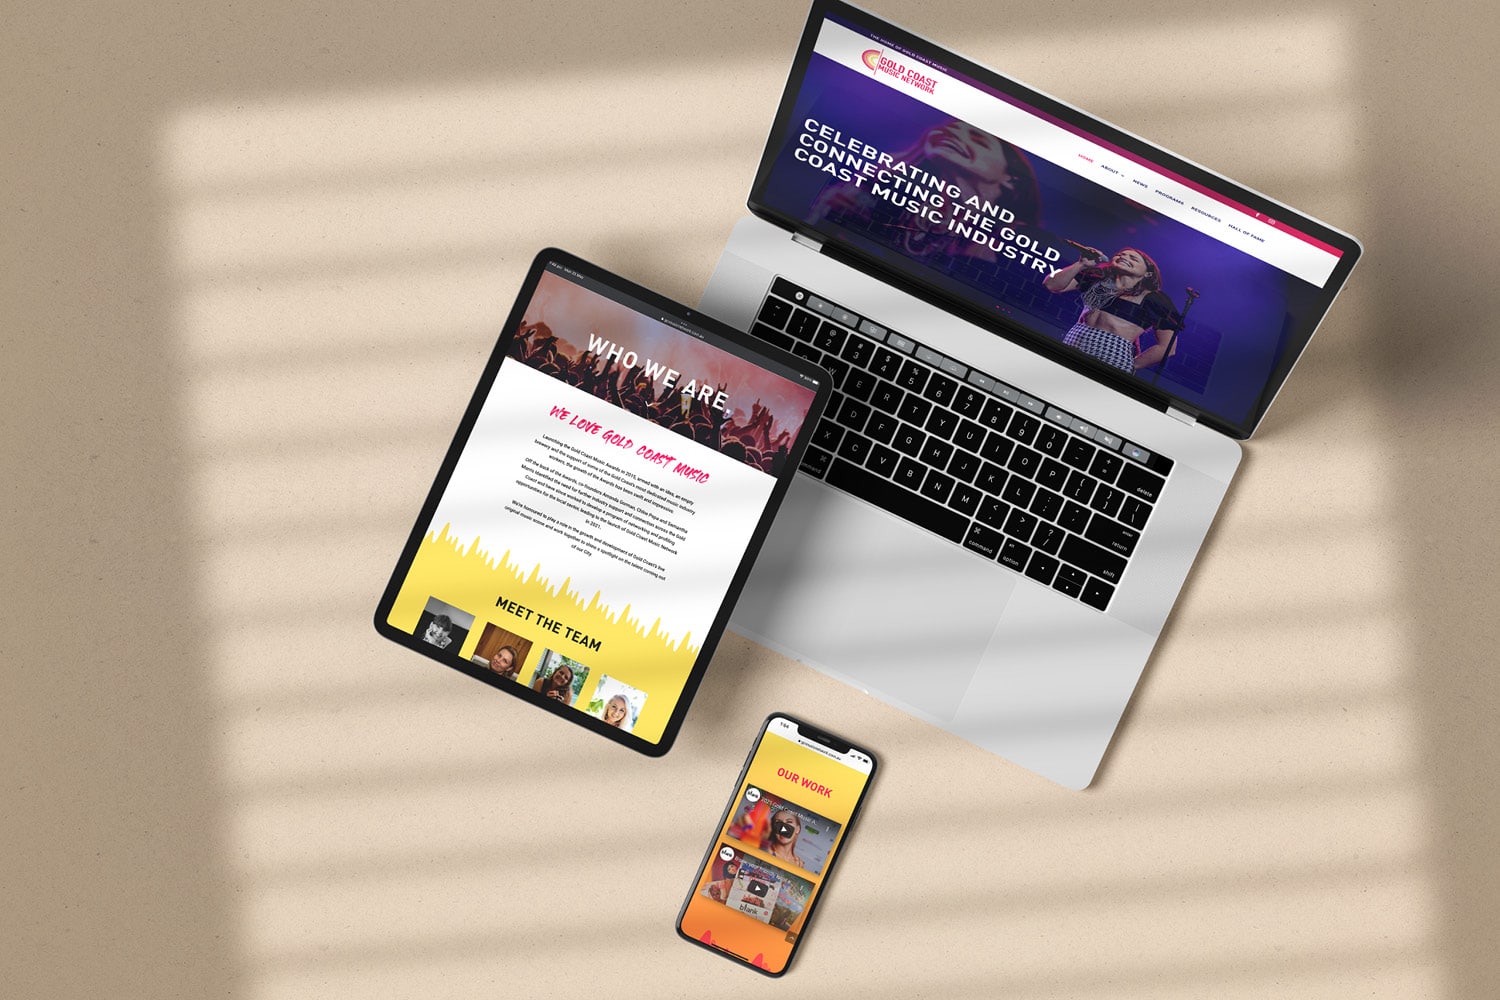 gold coast music awards website design devices